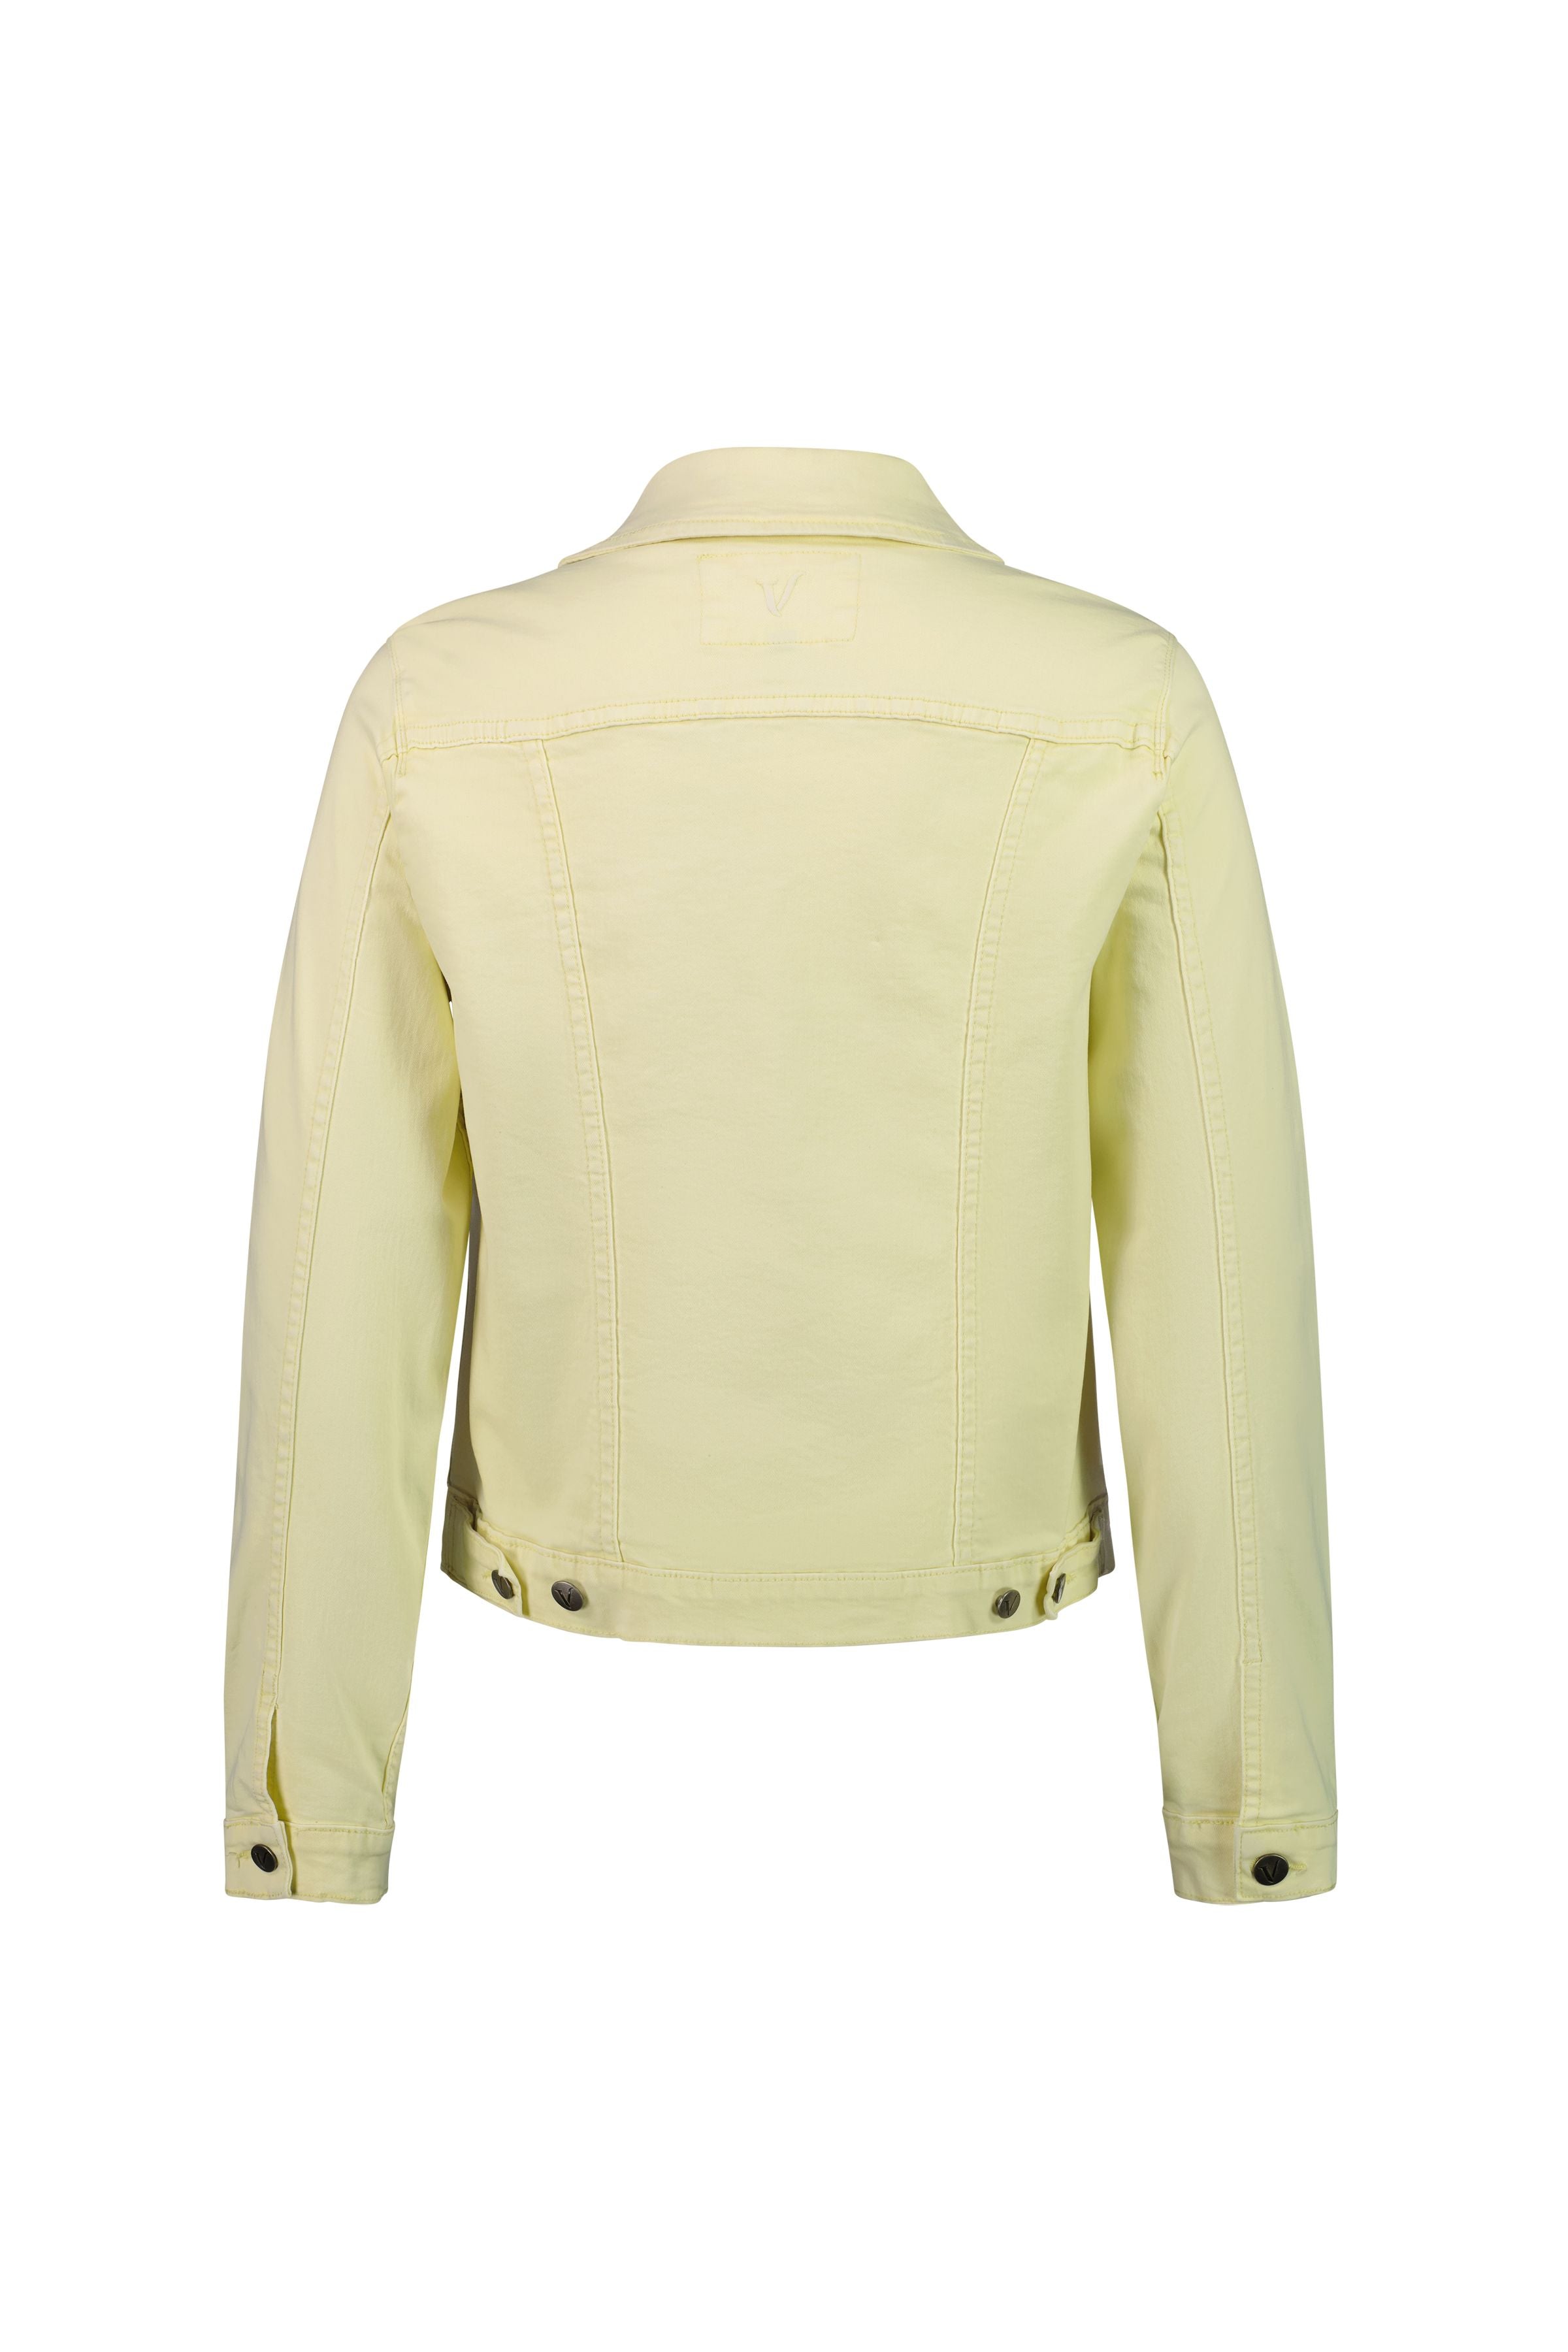 ONLY EDGY CROPPED - Denim jacket - lemon meringue/light yellow - Zalando.de